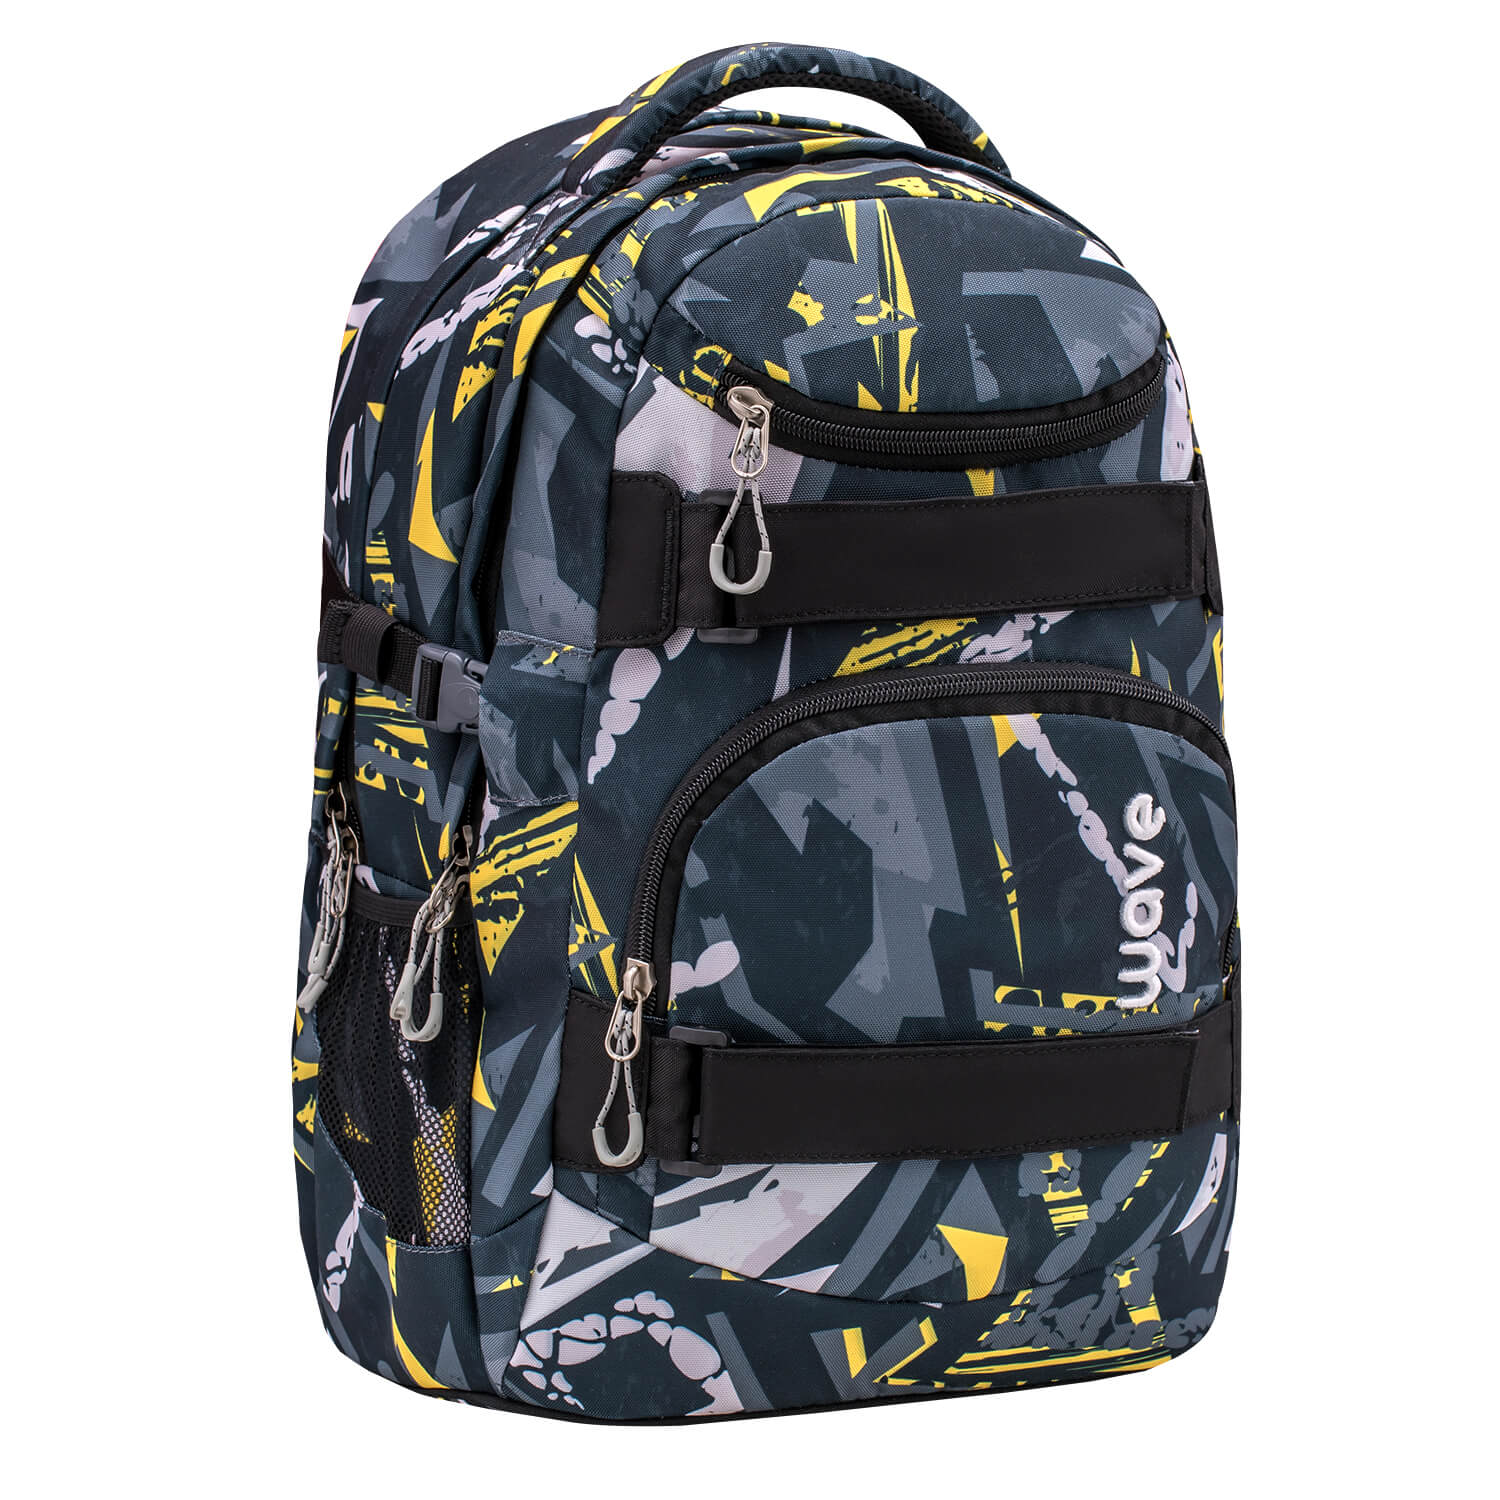 Wave Infinity Yellow Graffiti school backpack Set 2 Pcs